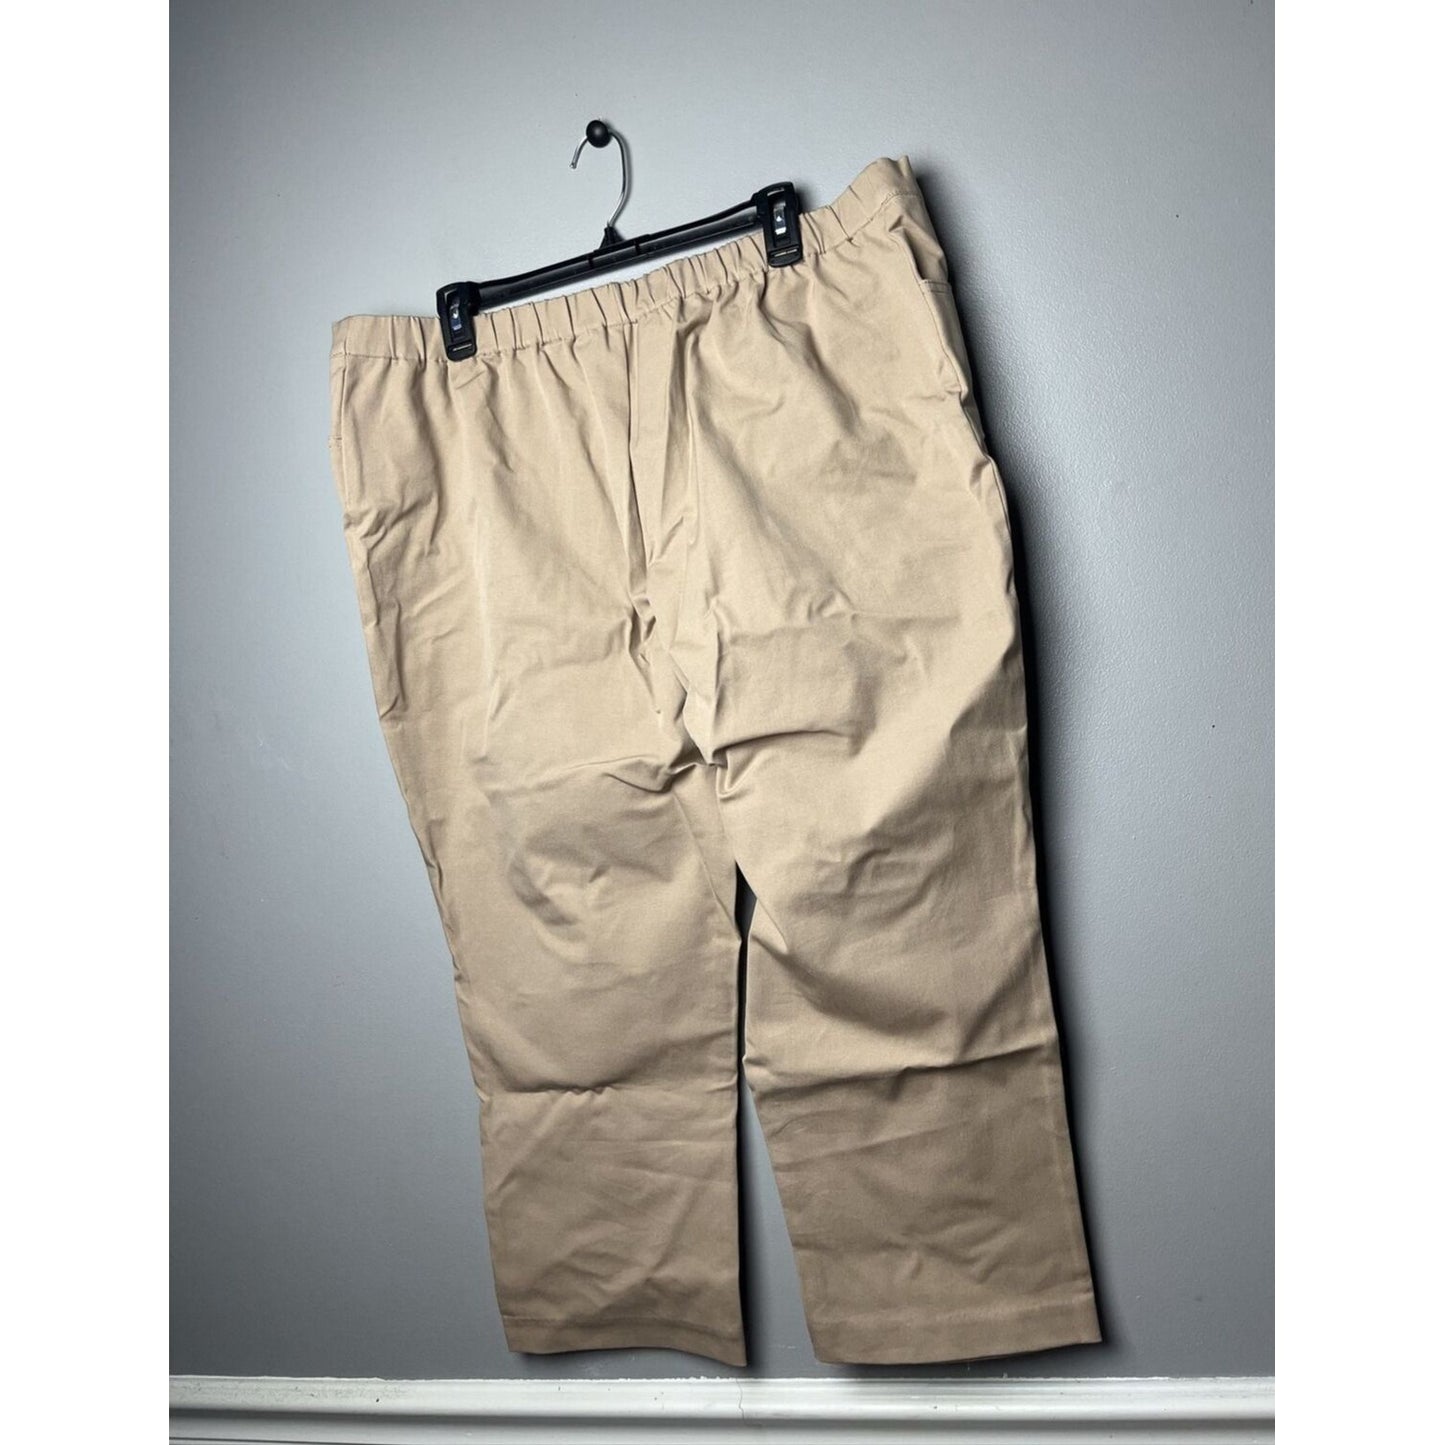 Isaac Mizrahi Regular 24/7 Stretch Crop Pants w/Pockets White Plus Petite 20WP